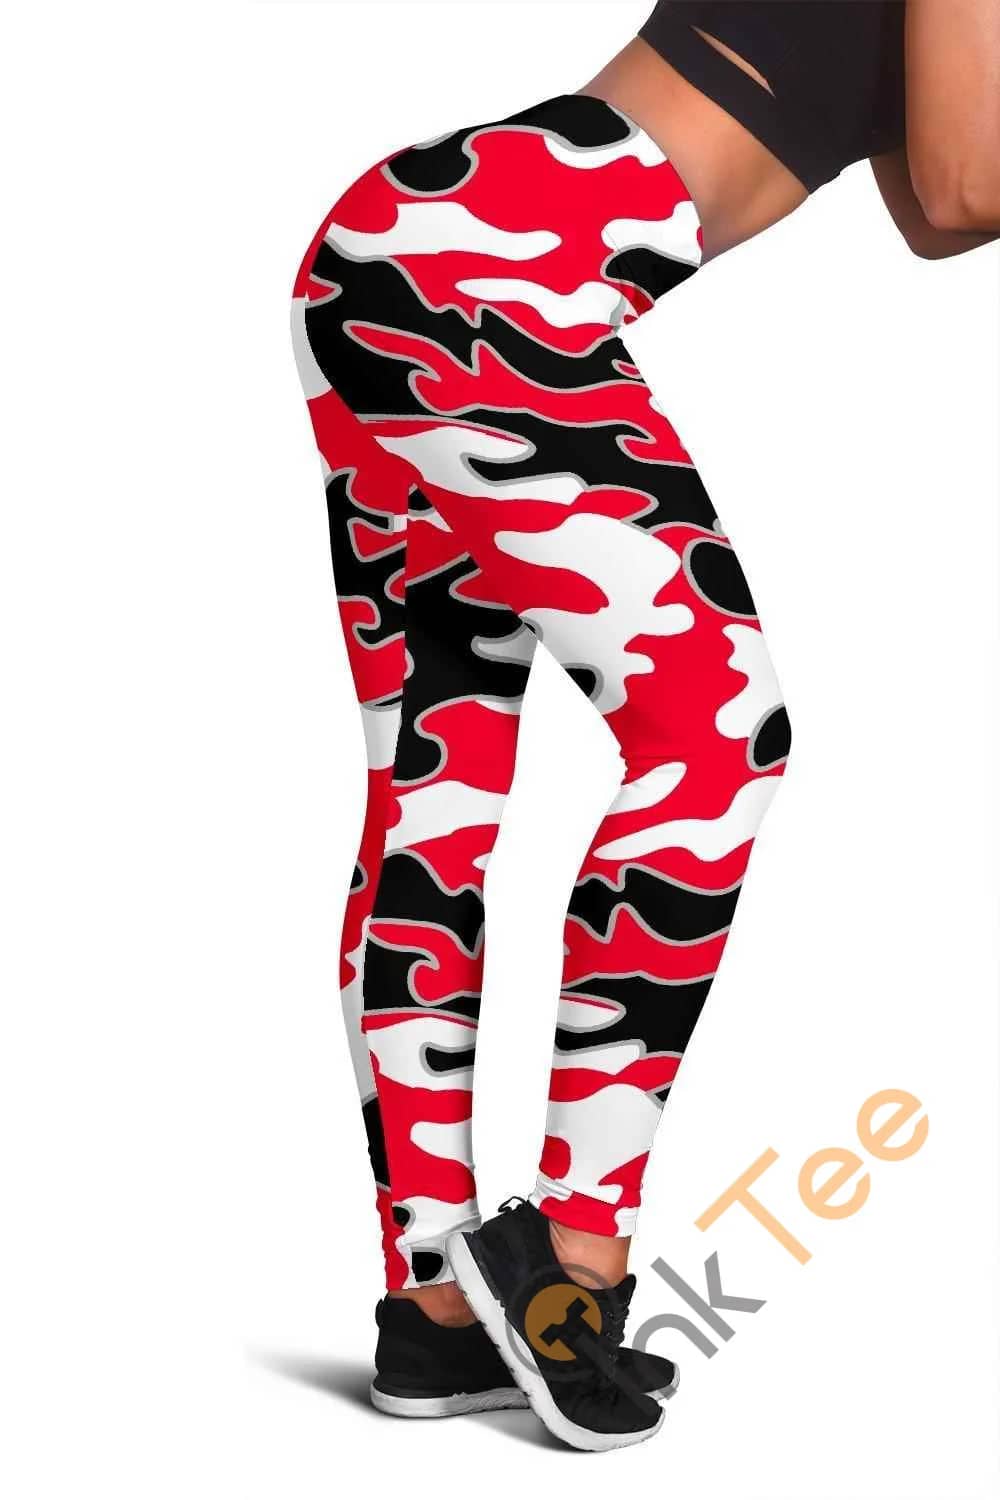 Cincinnati Reds Inspired Tru Camo 3D All Over Print For Yoga Fitness Fashion Women's Leggings